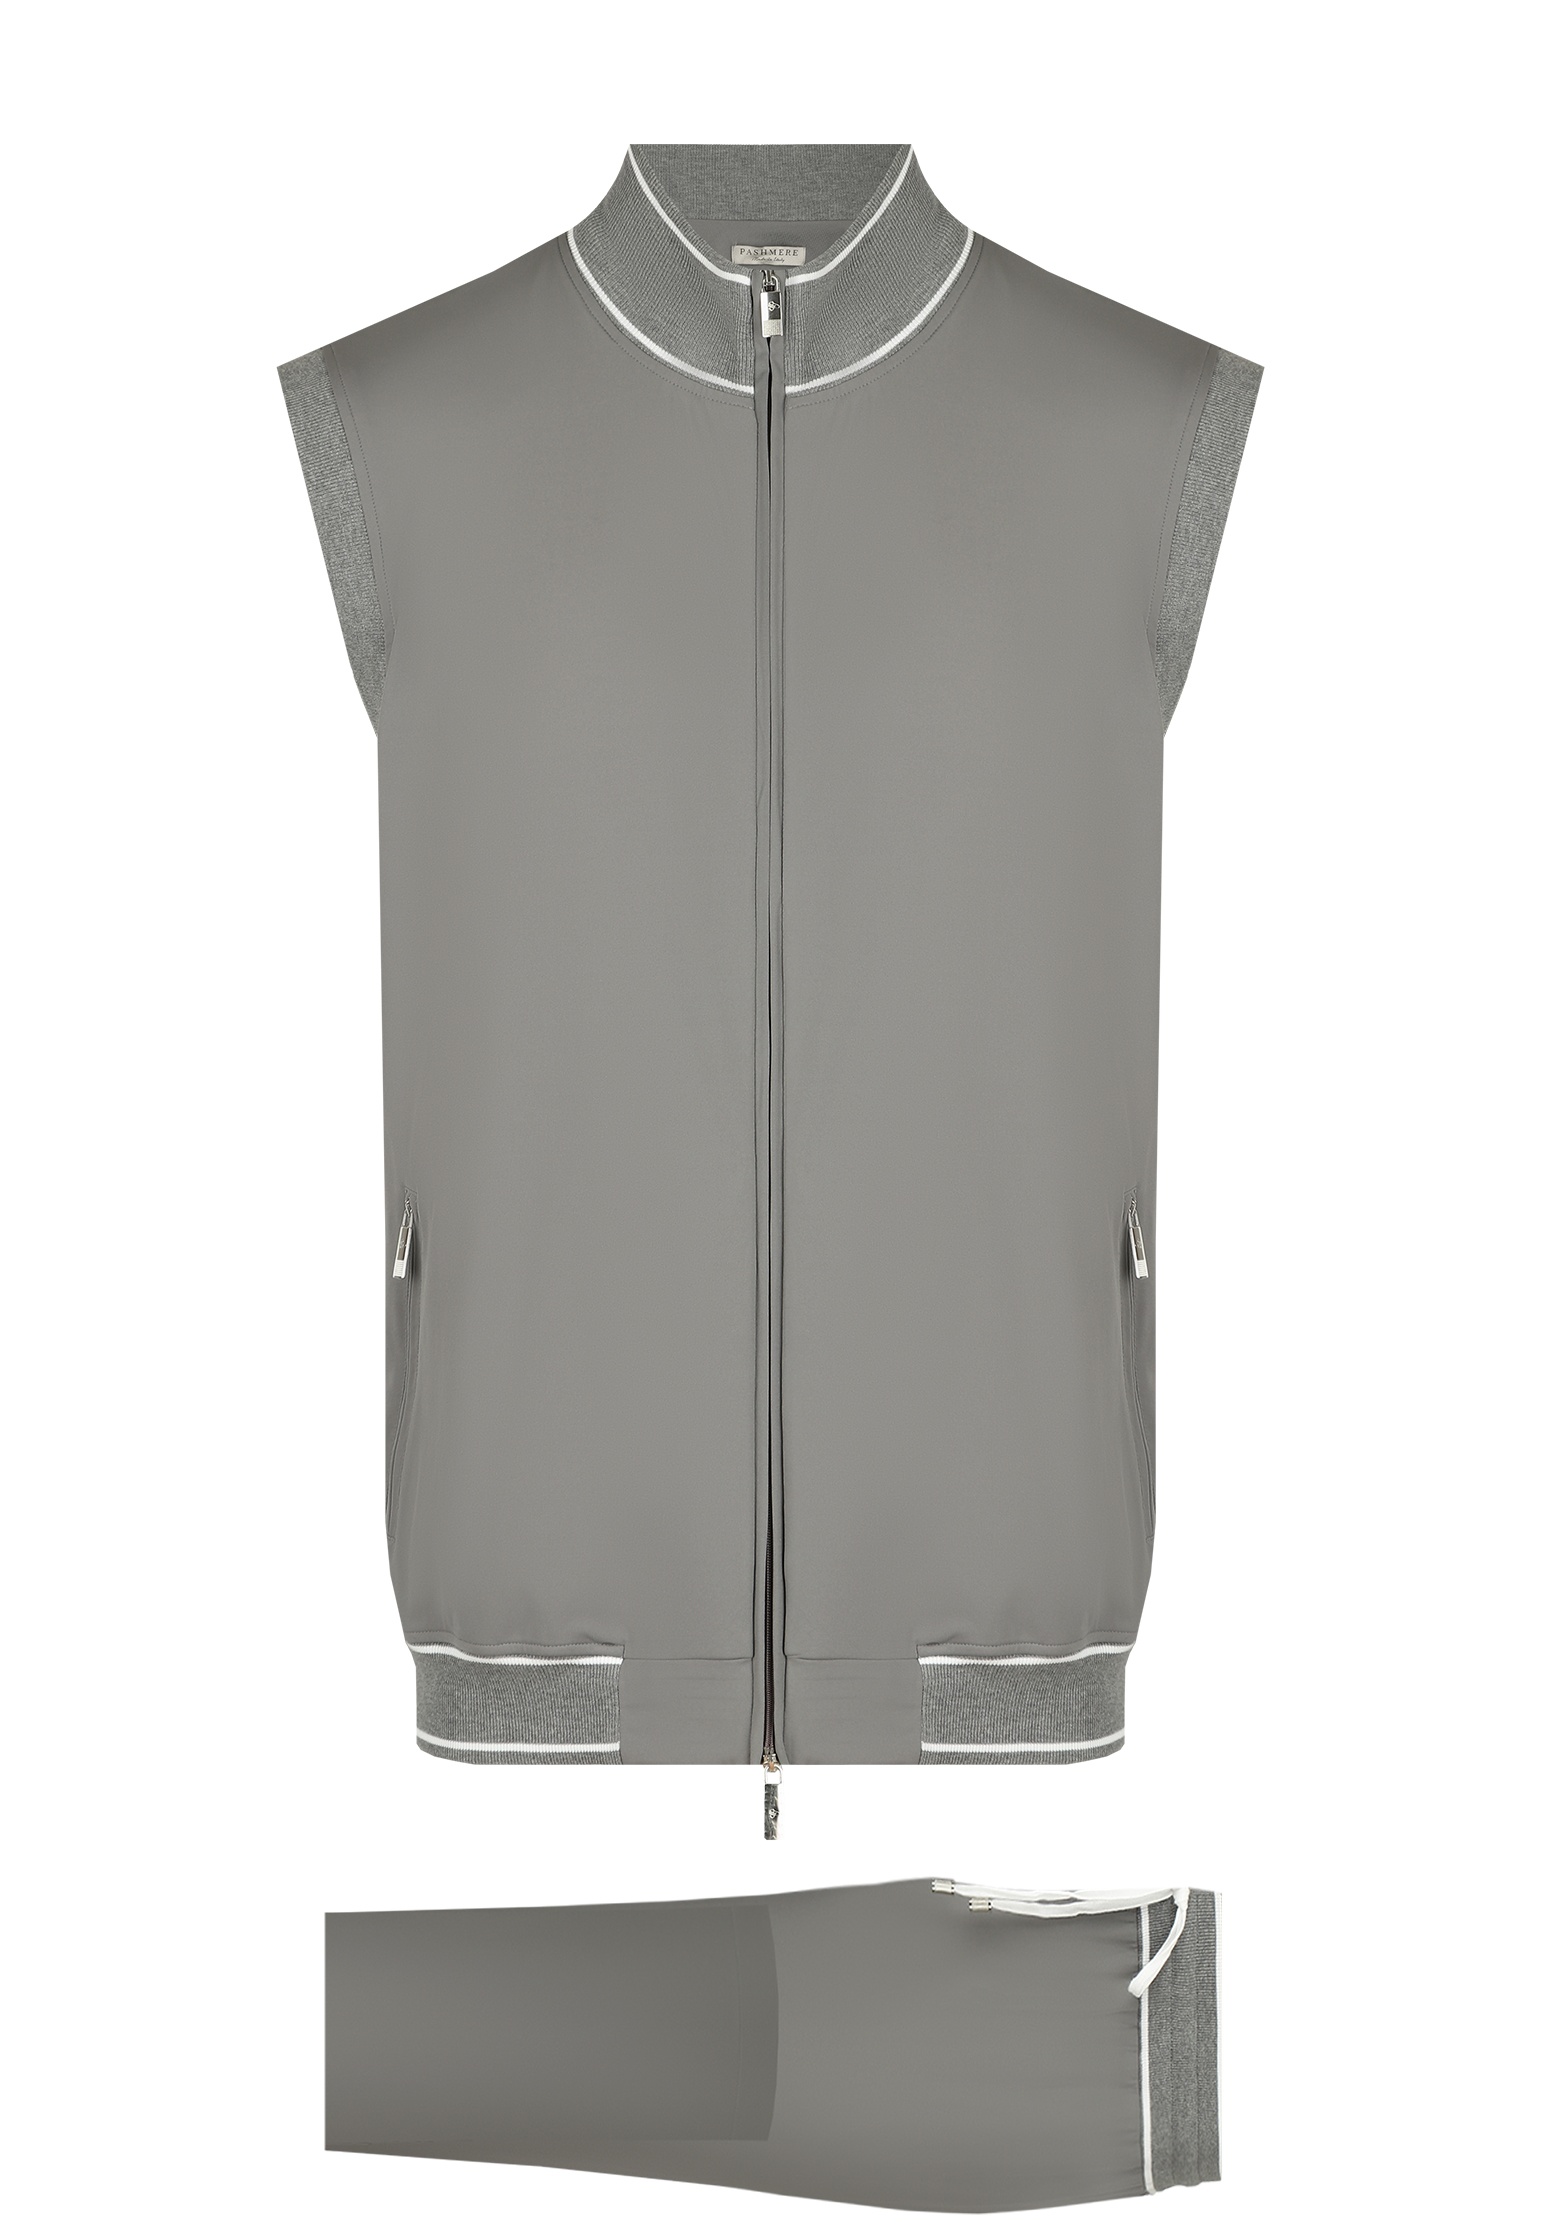 Спортивный костюм PASHMERE Серый, размер 2XL 143901 - фото 1